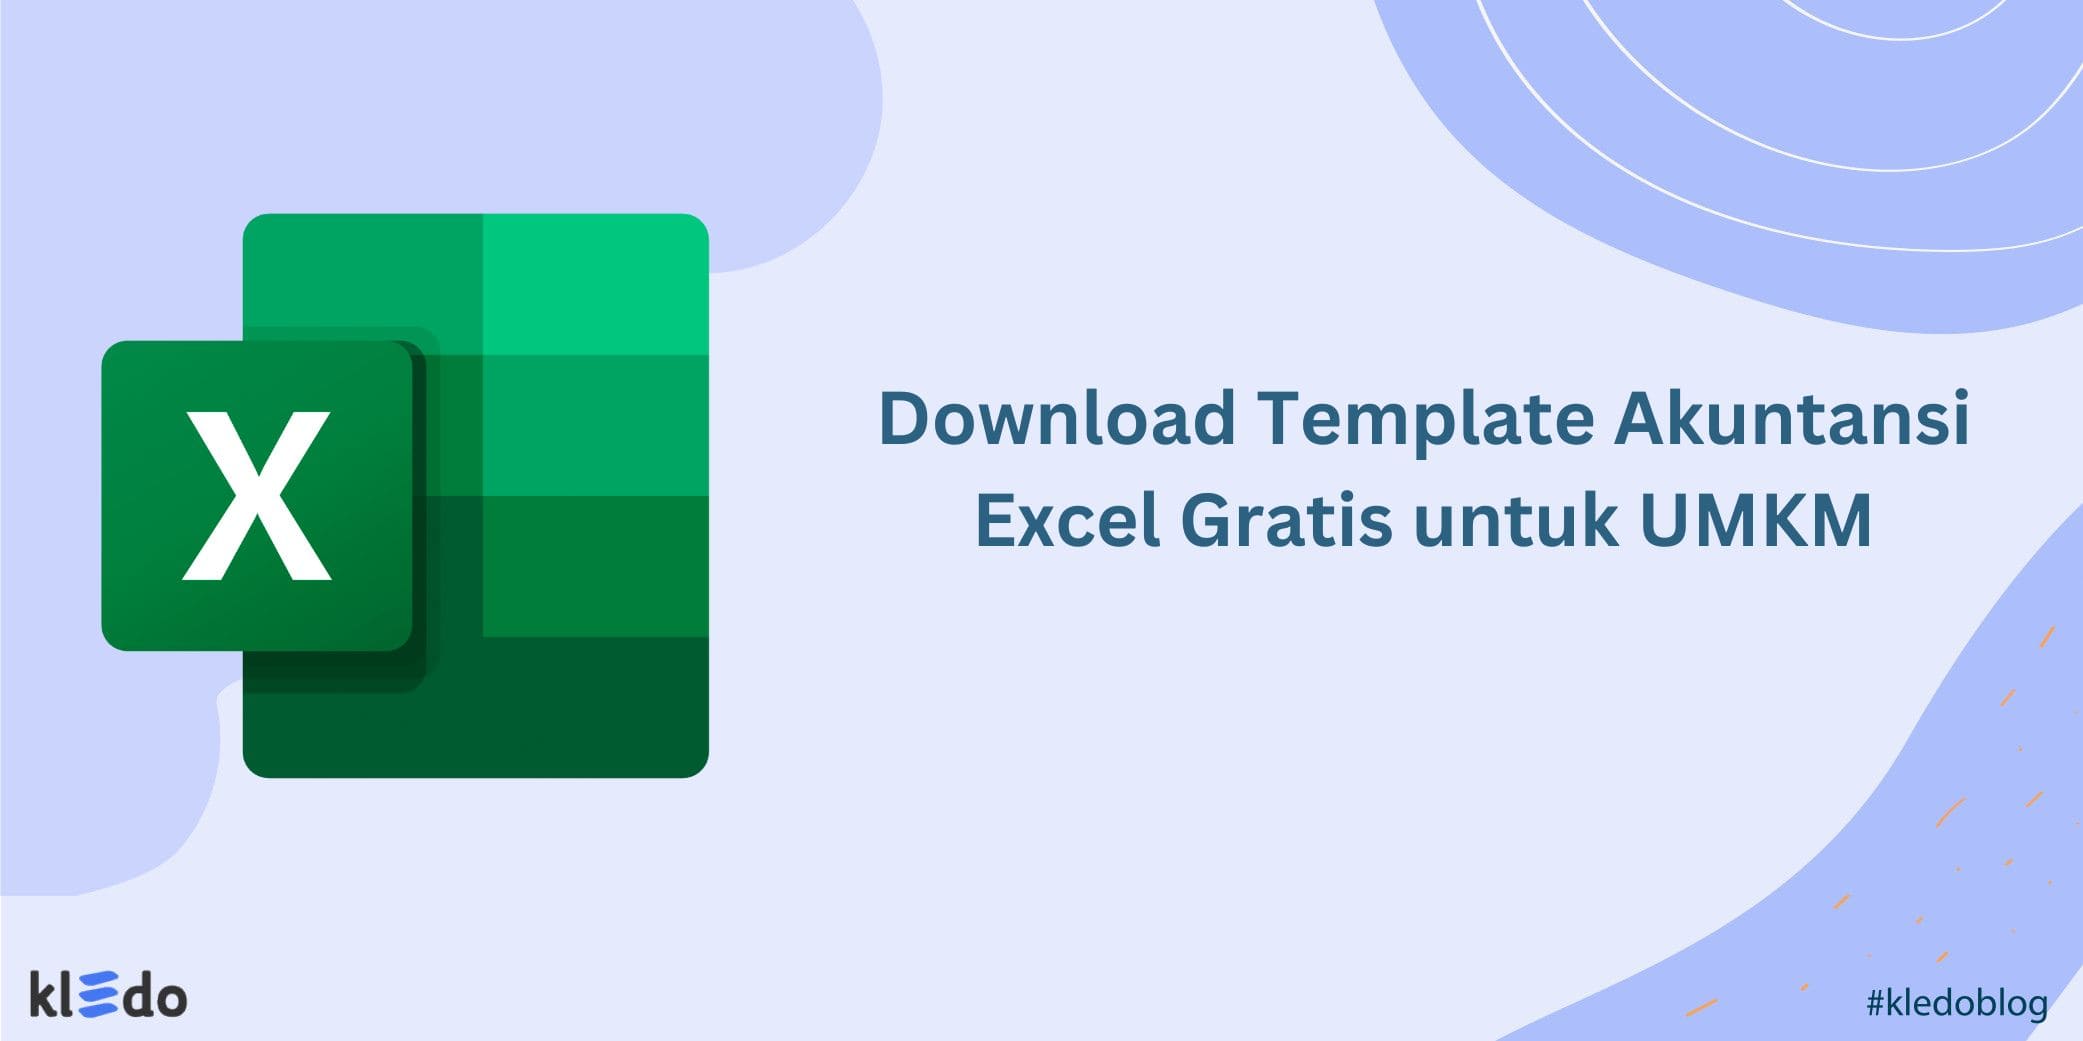 Download Template Akuntansi Excel Gratis untuk UMKM